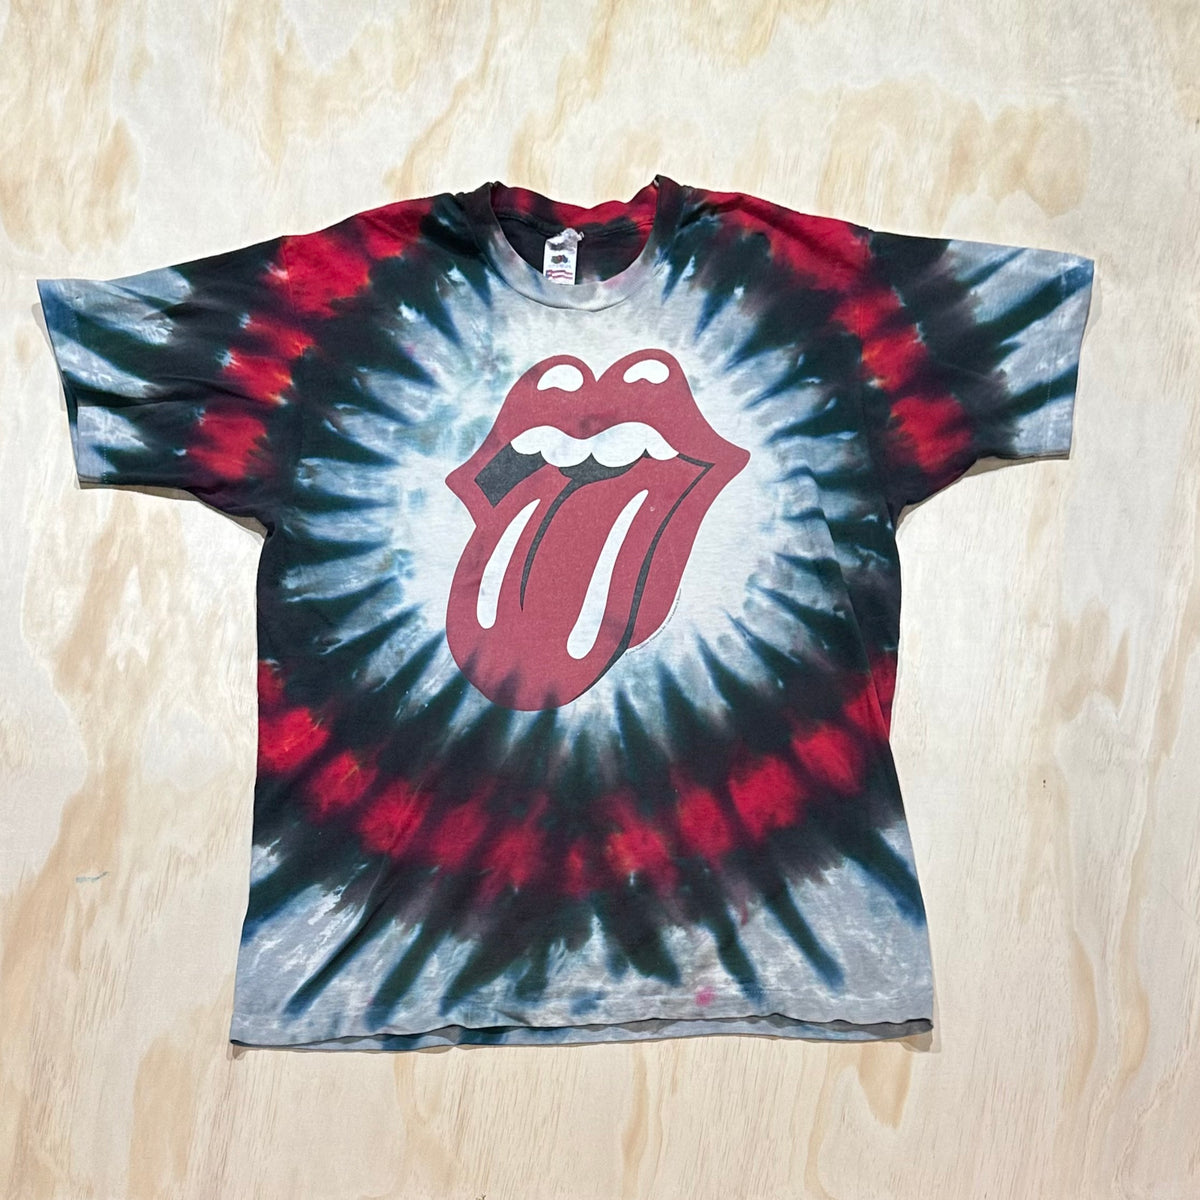 1994 Vintage The Rolling Stones Tie Dye VooDoo Lounge Tour T-Shirt